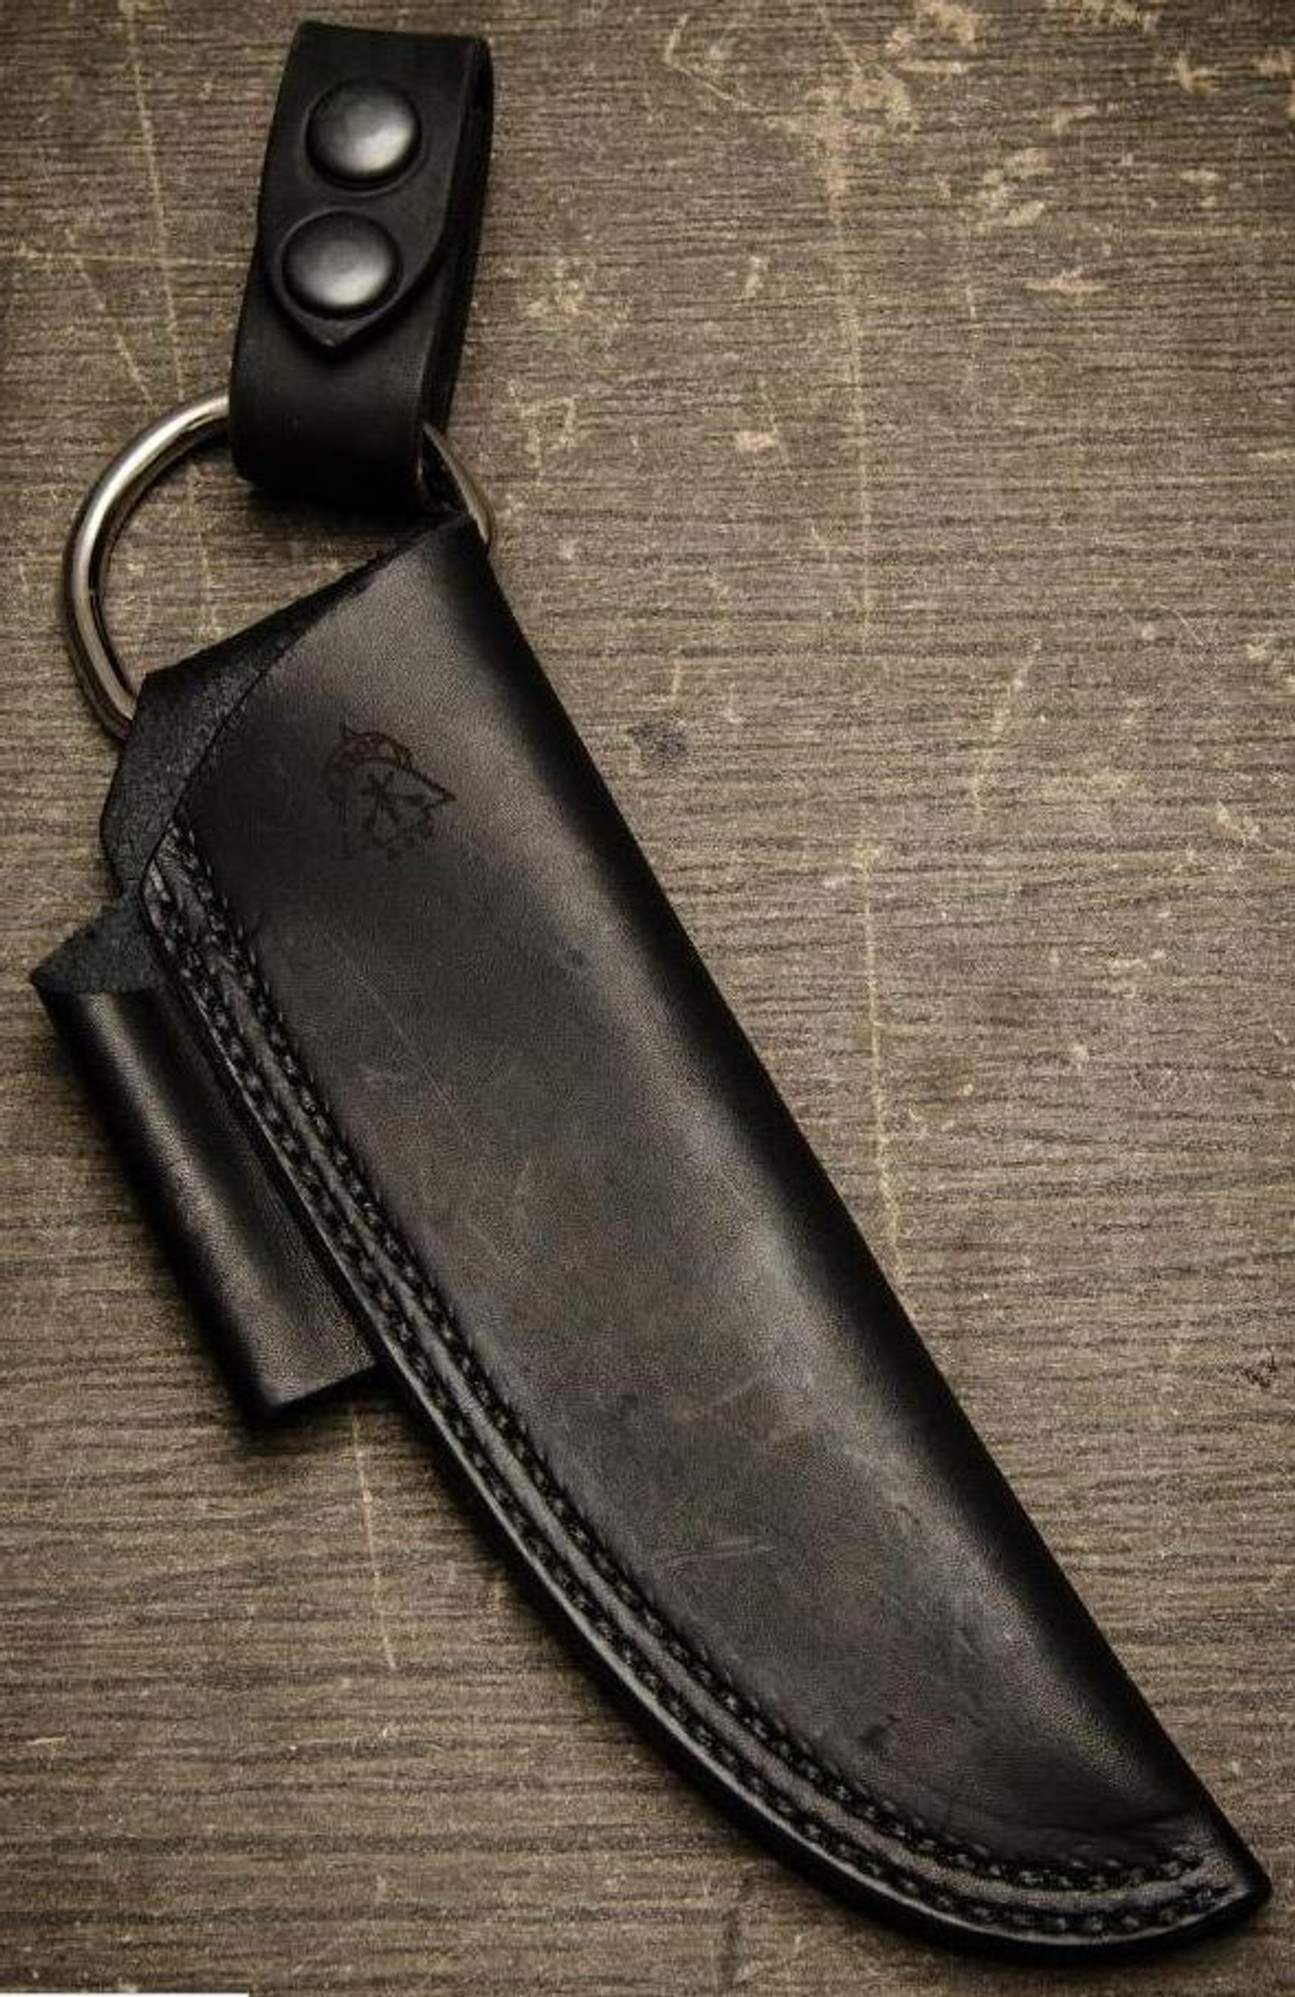 TOPS Bushcraft Leather Sheath & Firestarter - Black